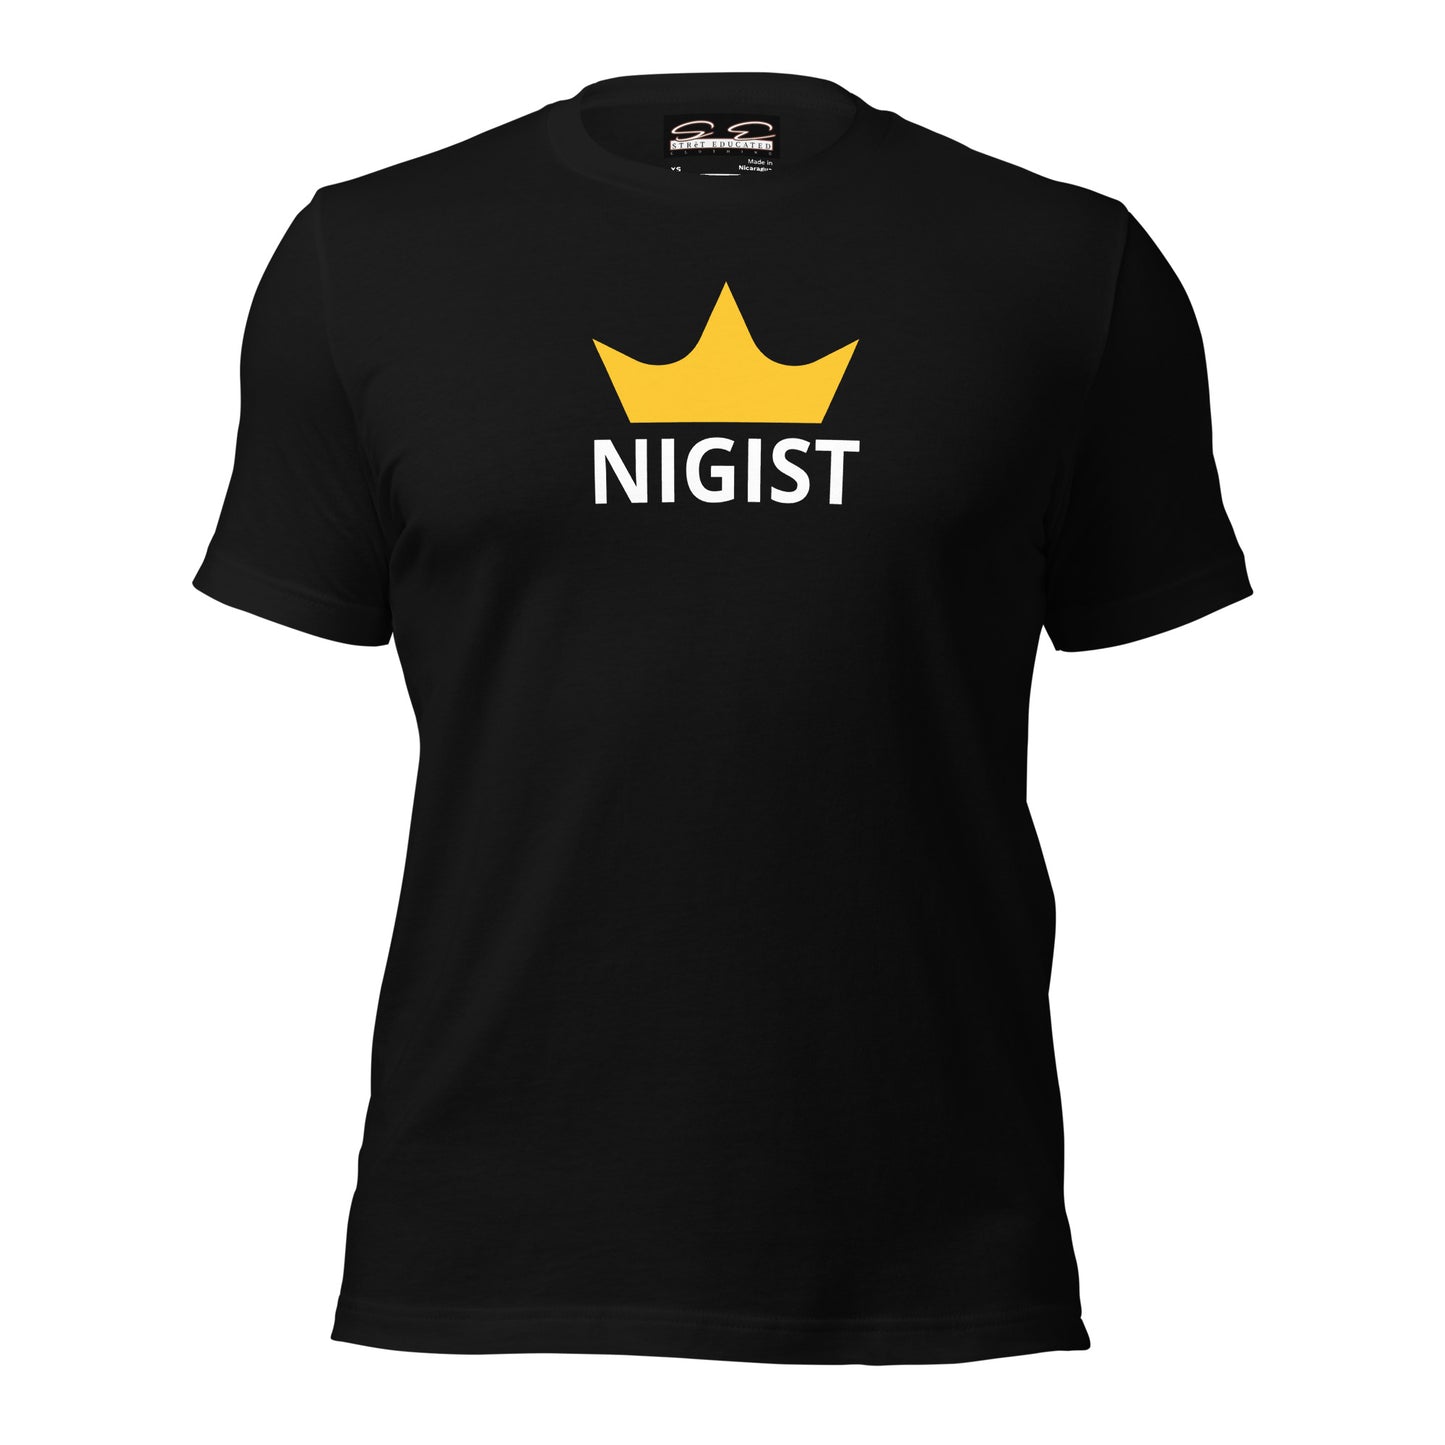 Nigist (Queen) t-shirt